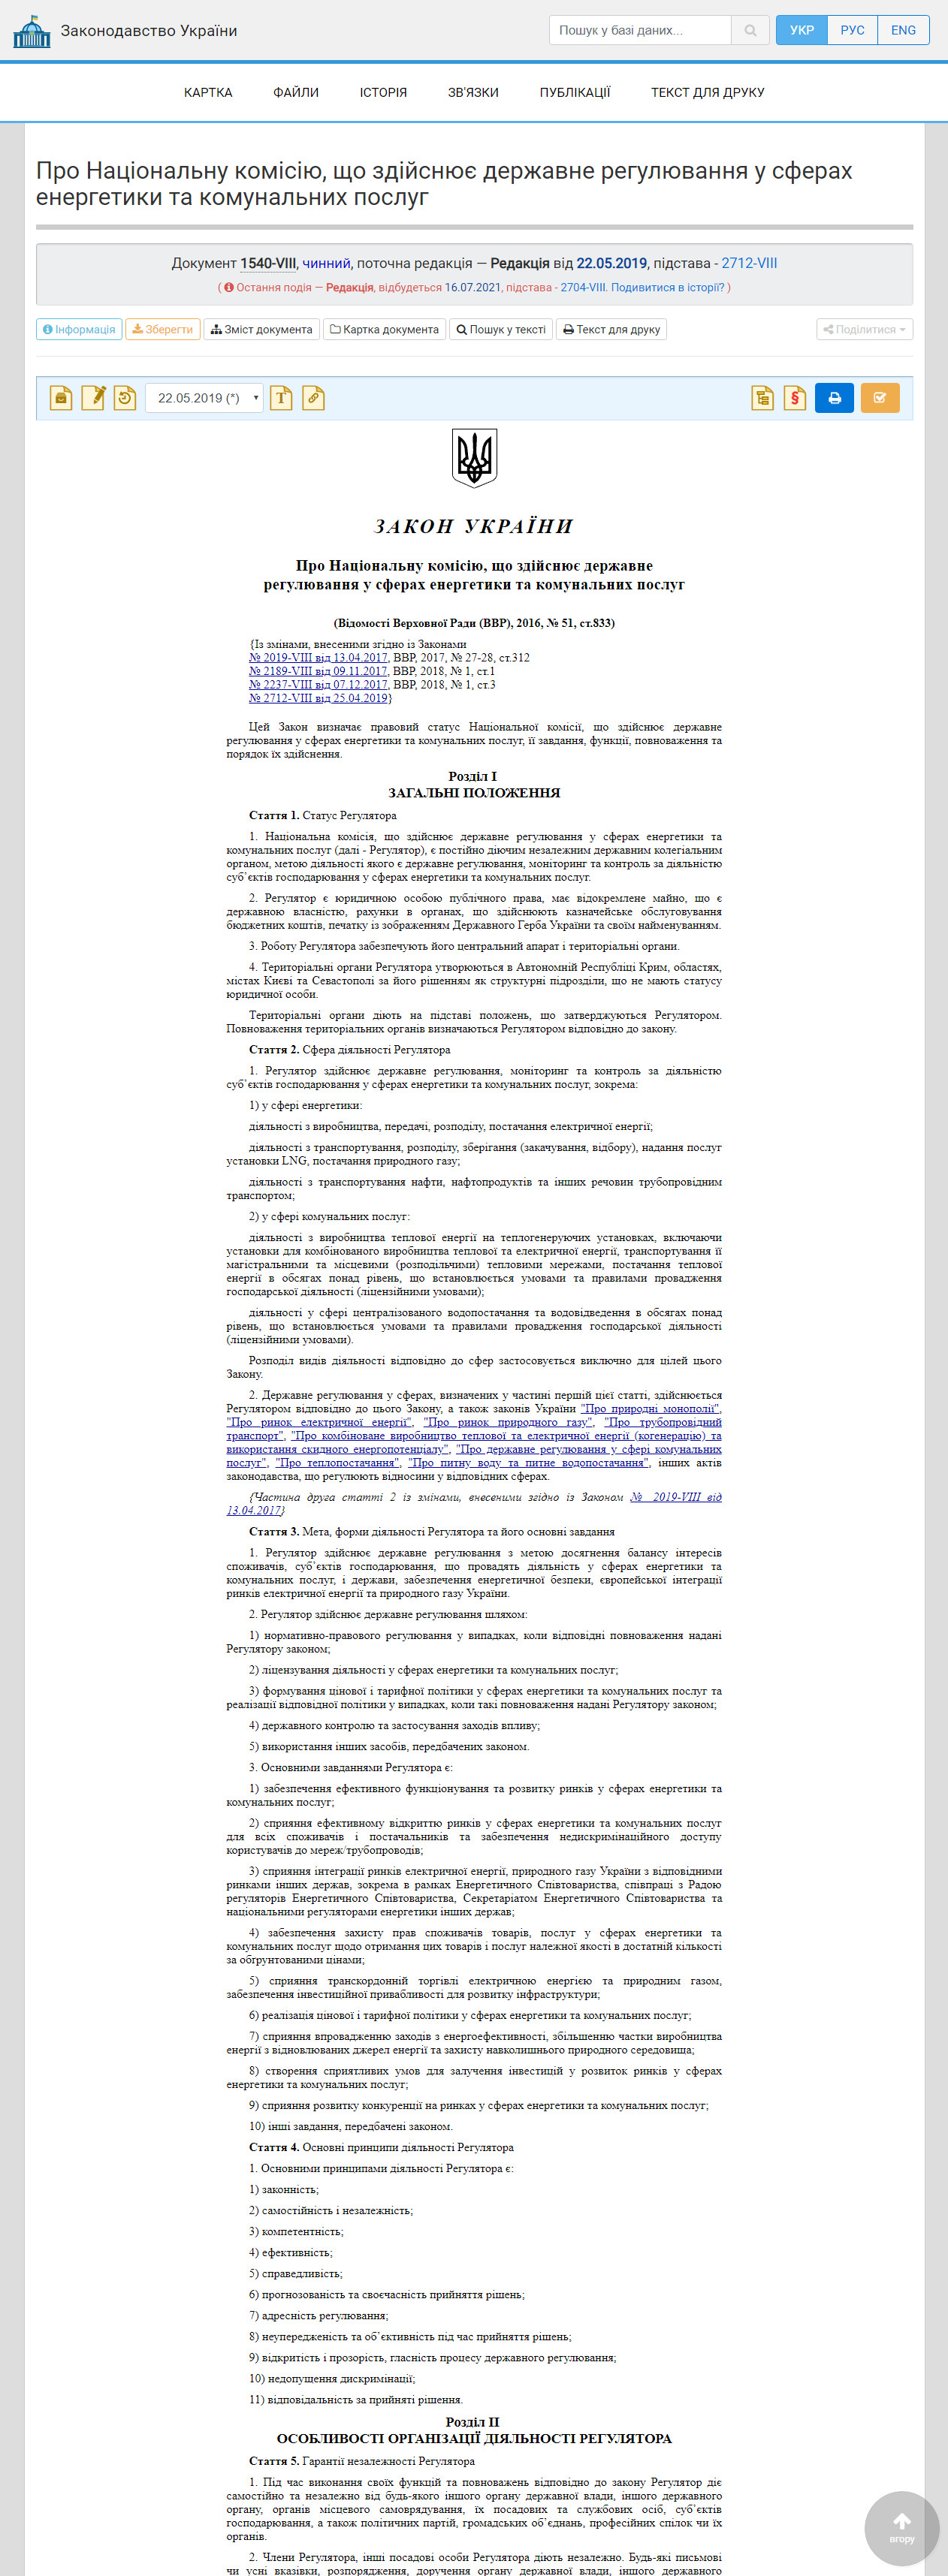 https://zakon.rada.gov.ua/laws/show/1540-19